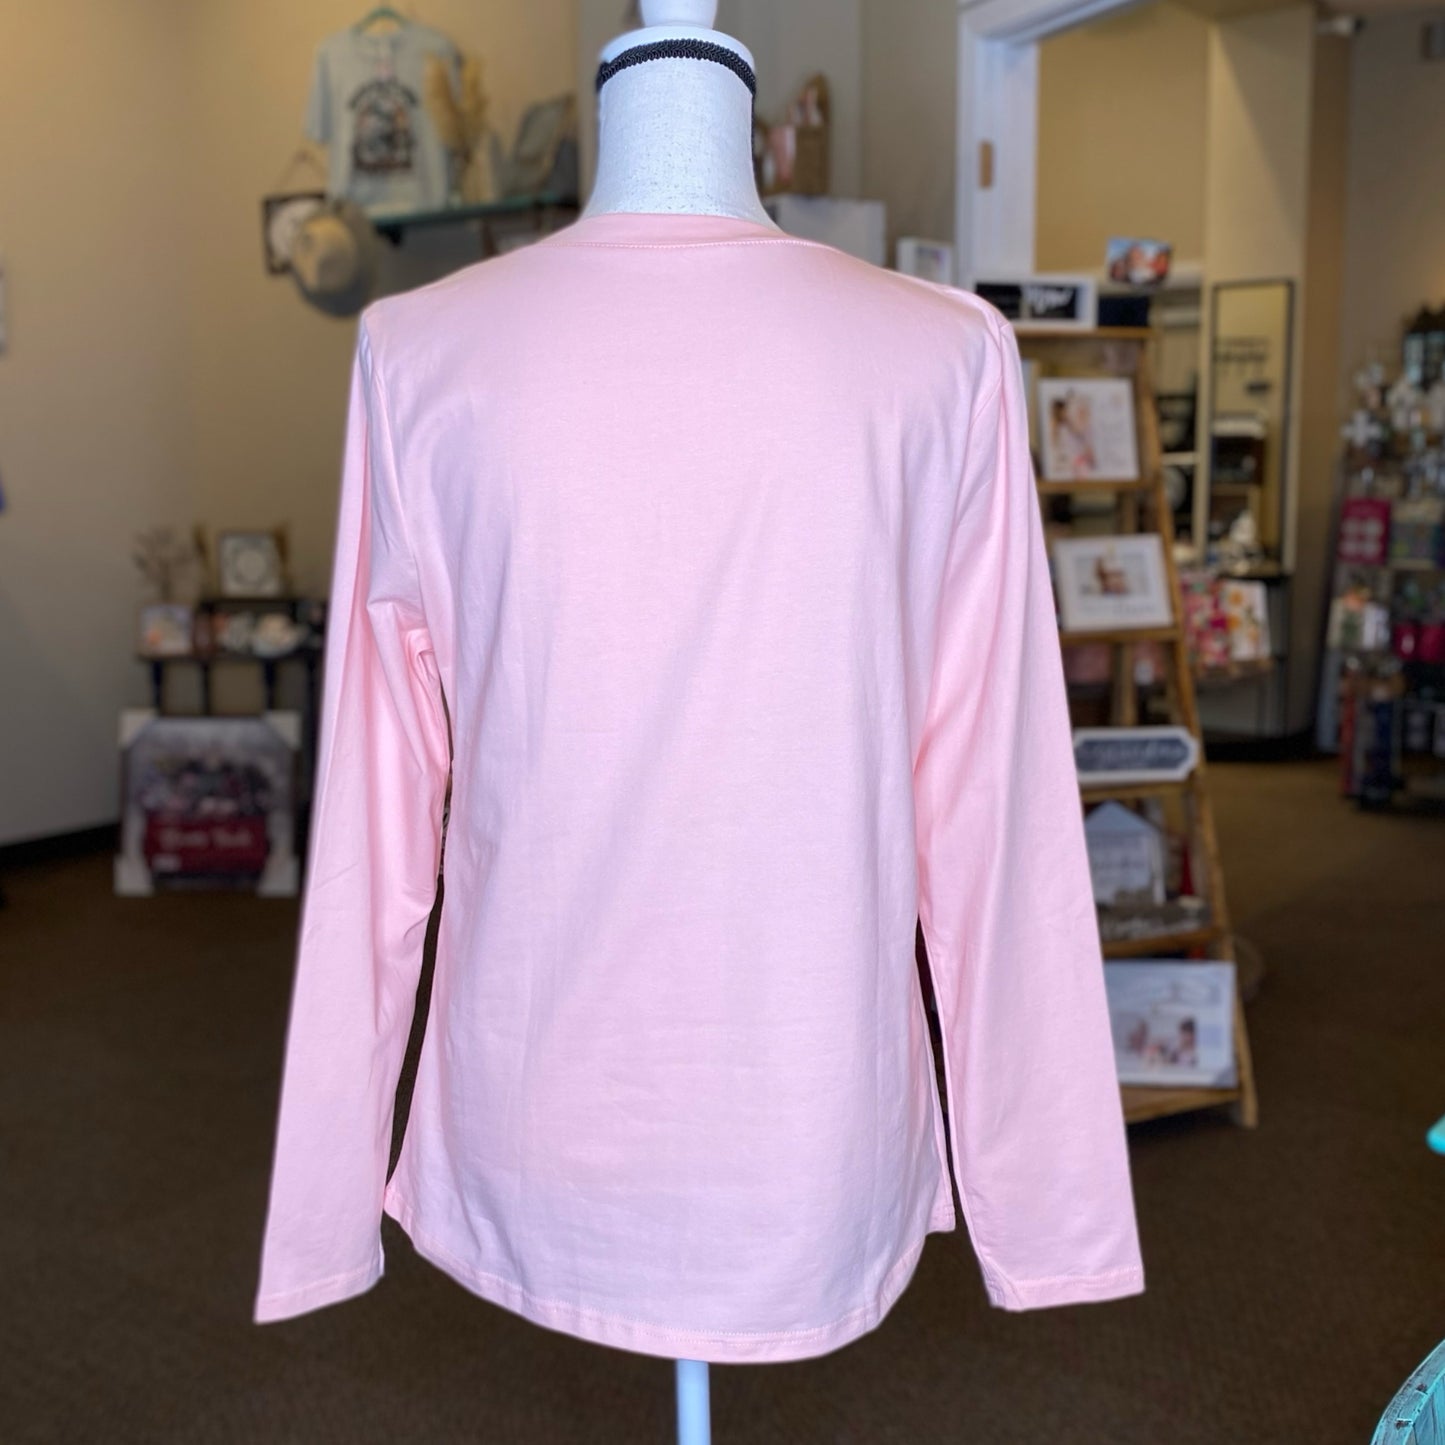 Pink Faux Wrap Long Sleeve Top - Size XL